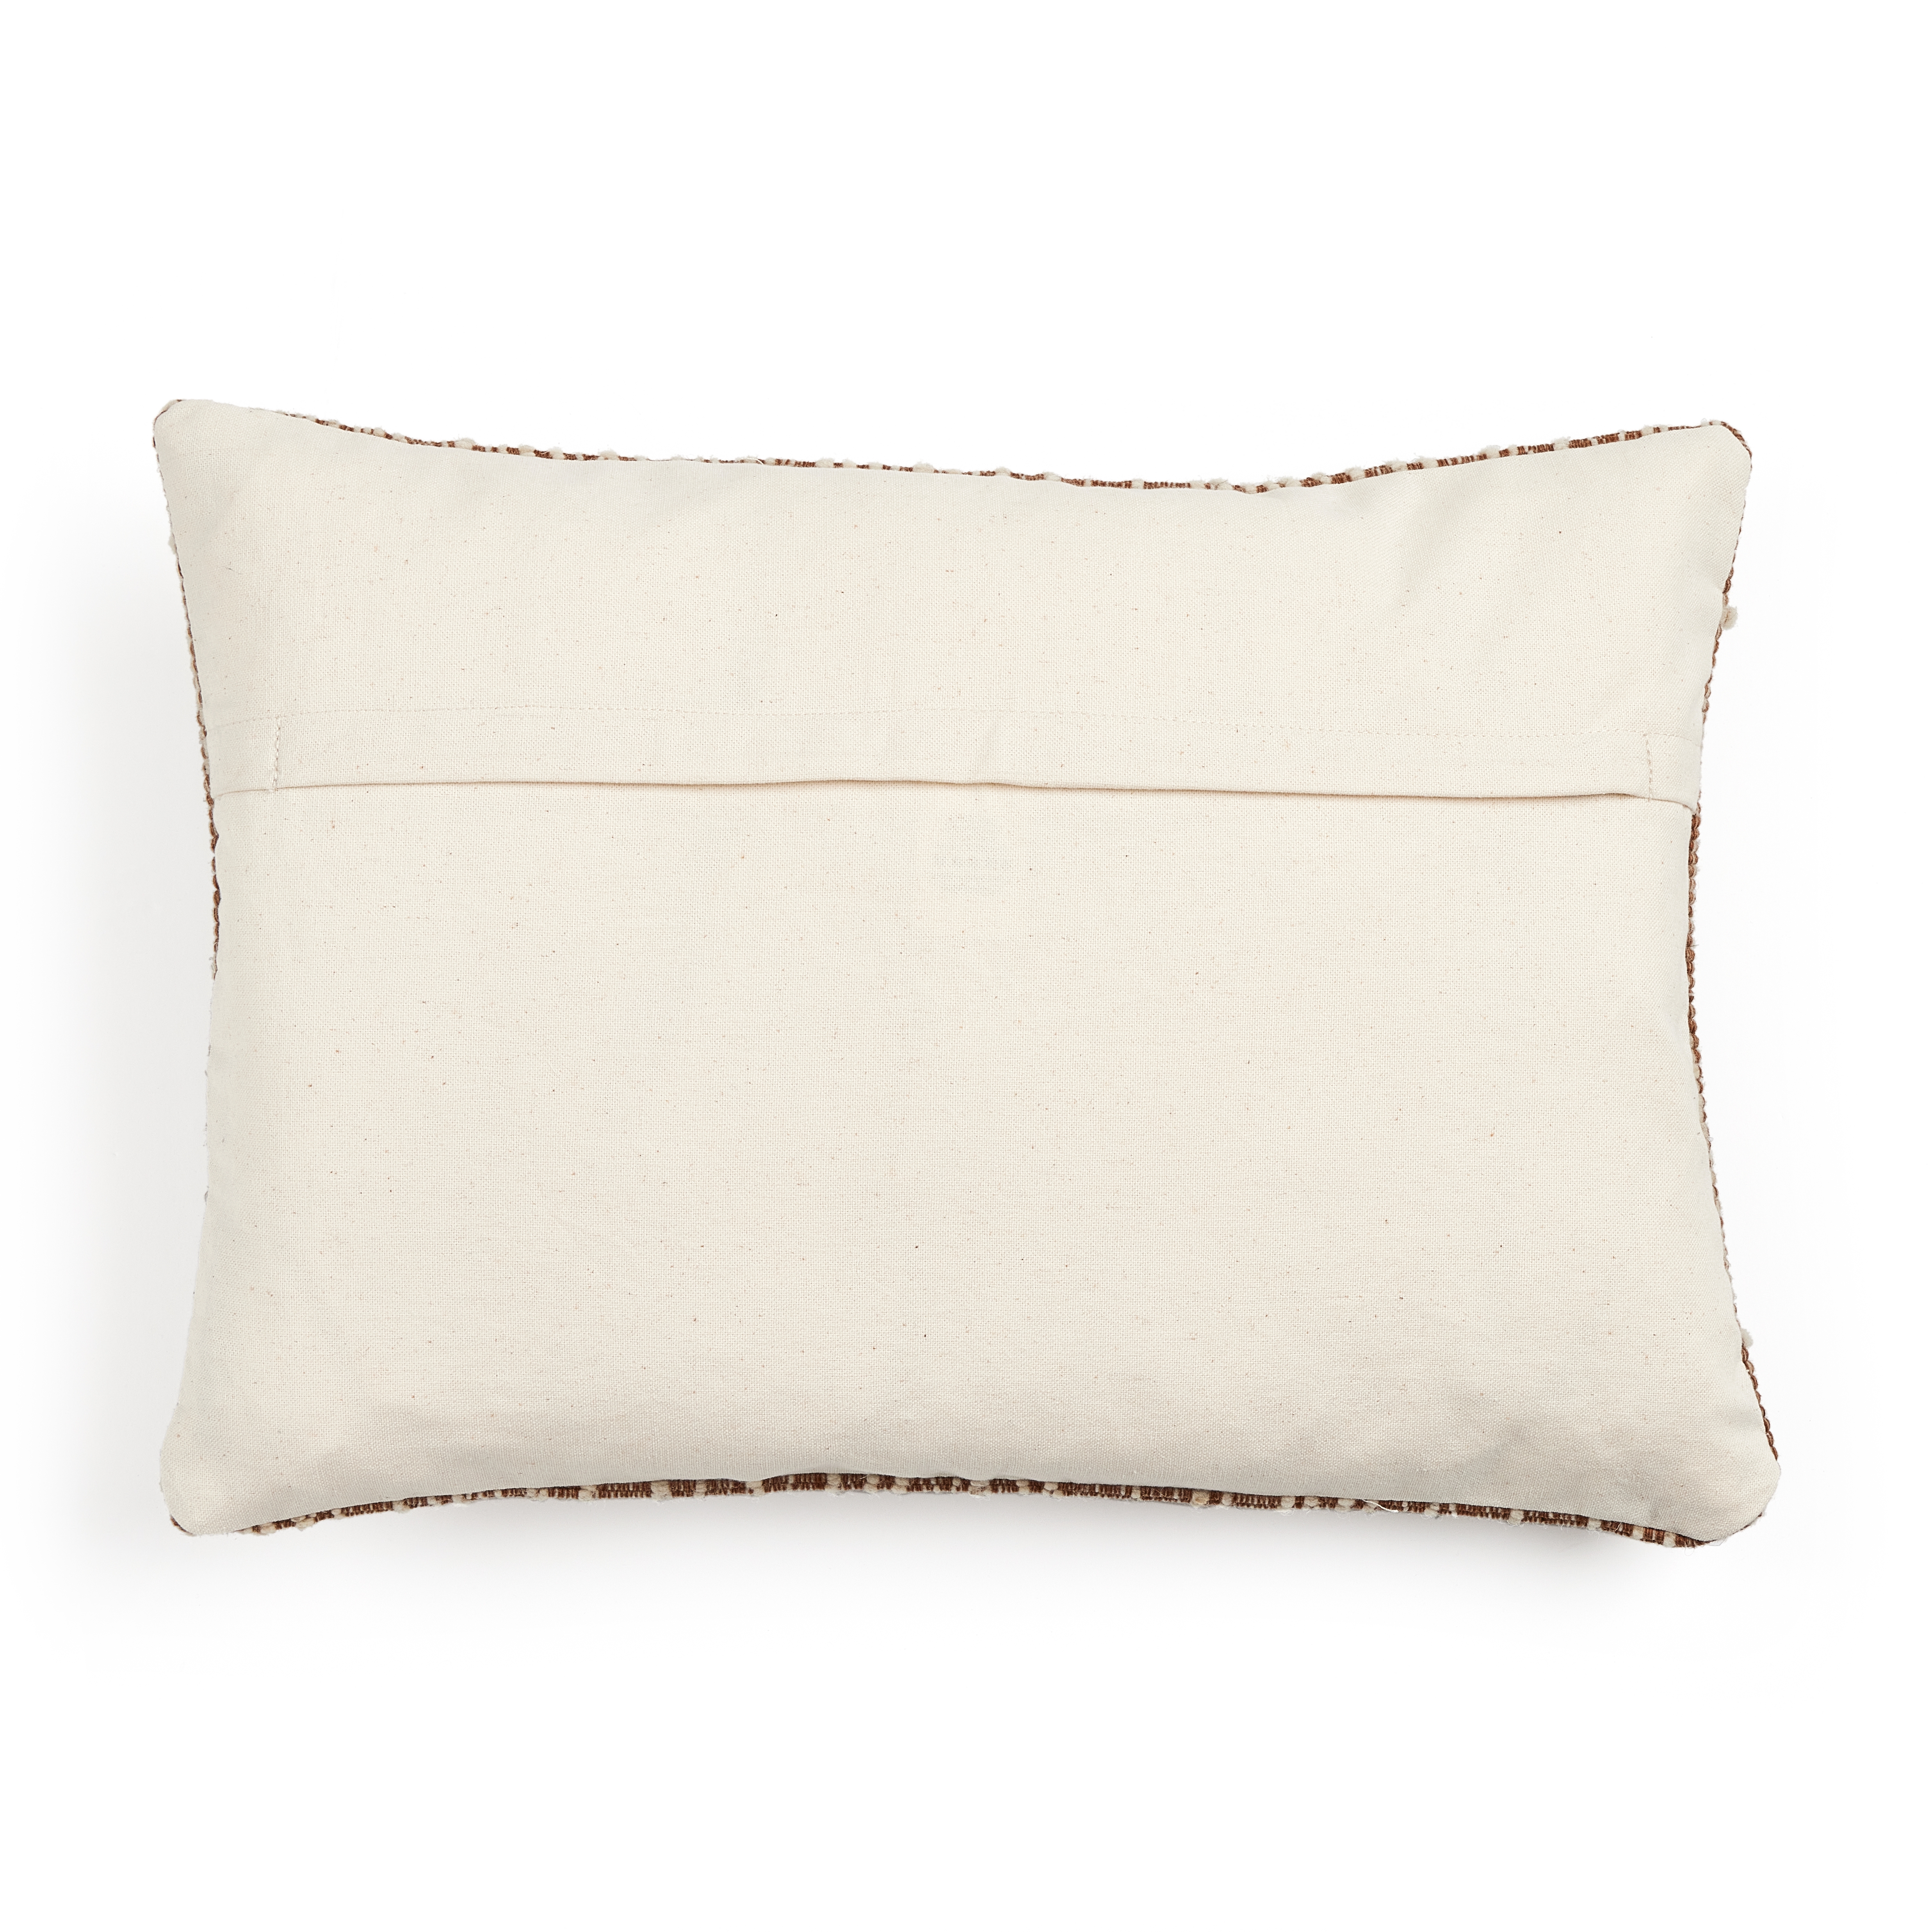 Handwoven Stripe Wool Pillow-Ntrl-14x20 - Image 3